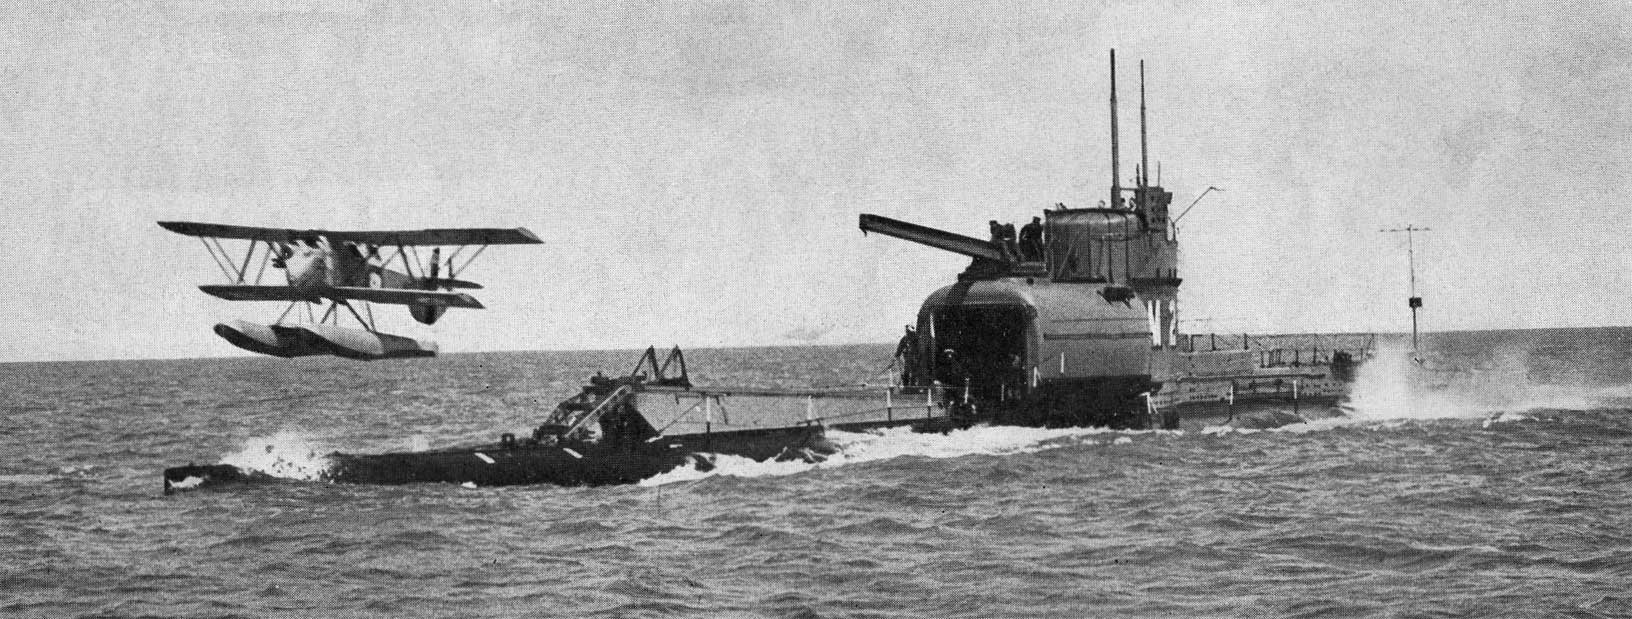 1er porte-avions sous-marin au monde, le HMS M2 F39a592b8a5bffeb79ae91824bc53fa4